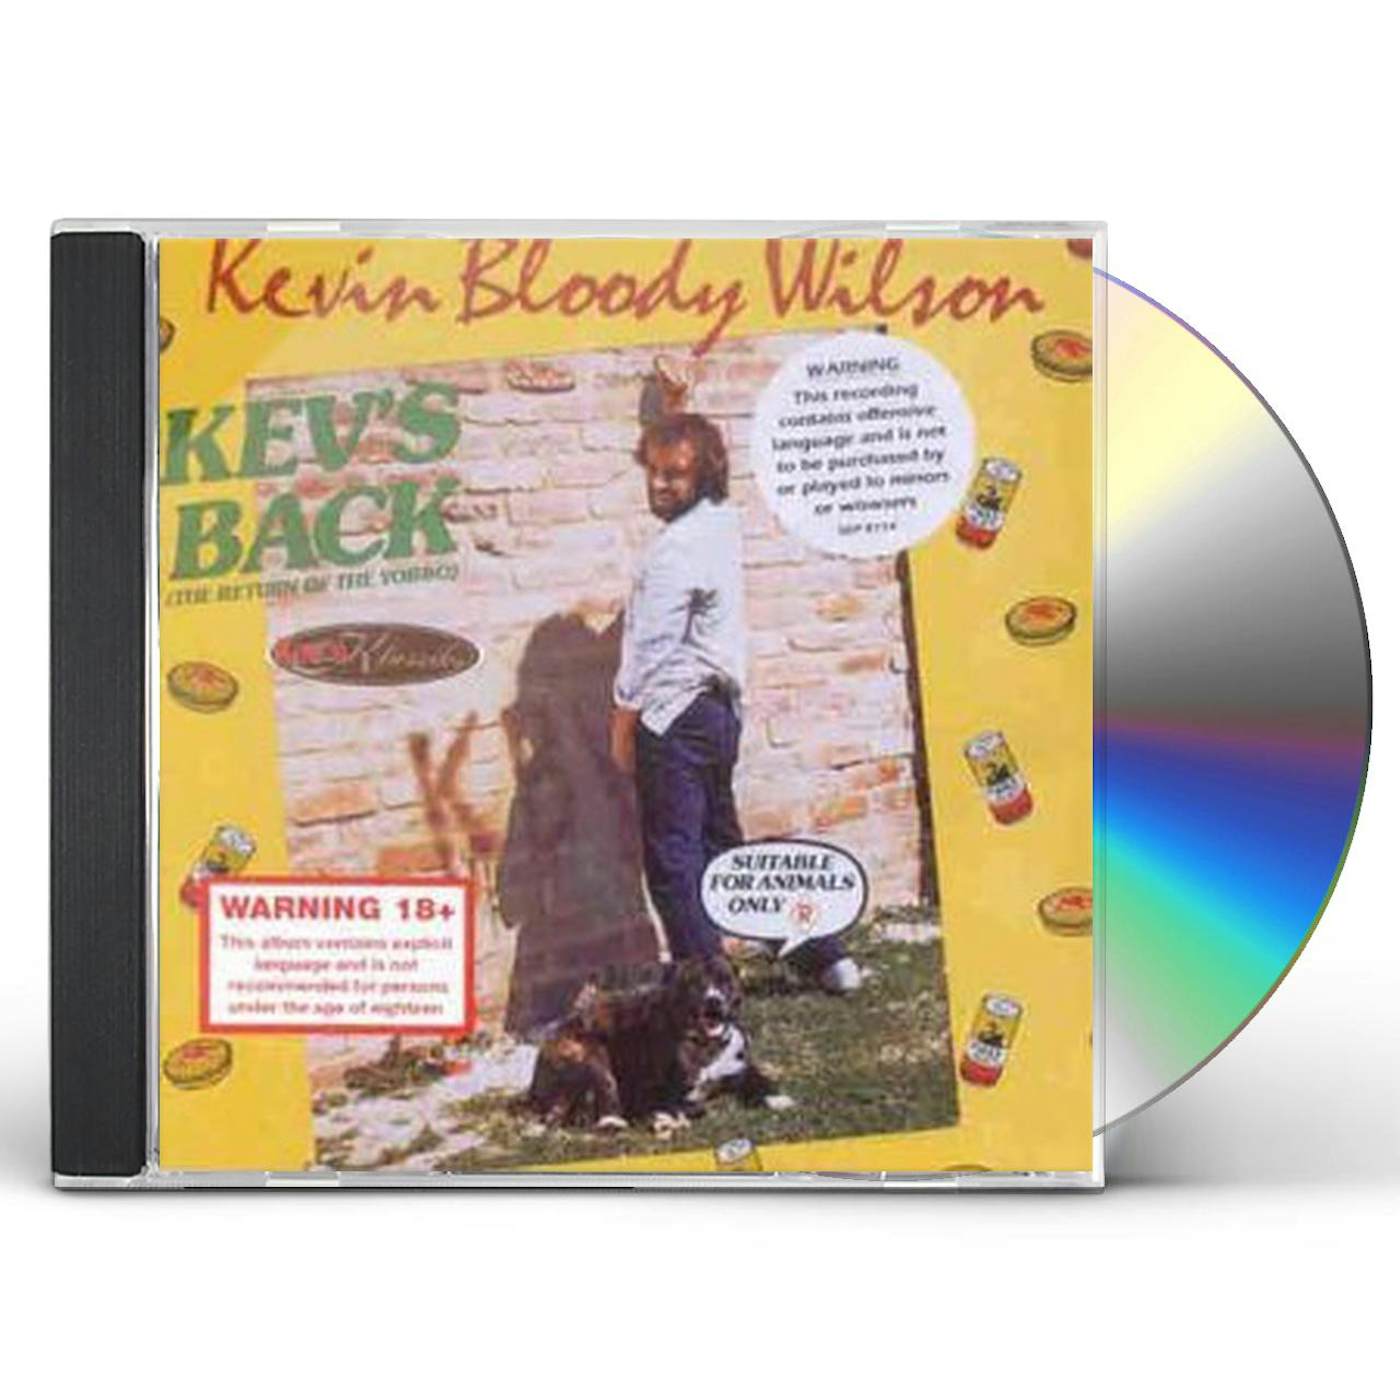 Kevin Bloody Wilson KEV'S BACK CD